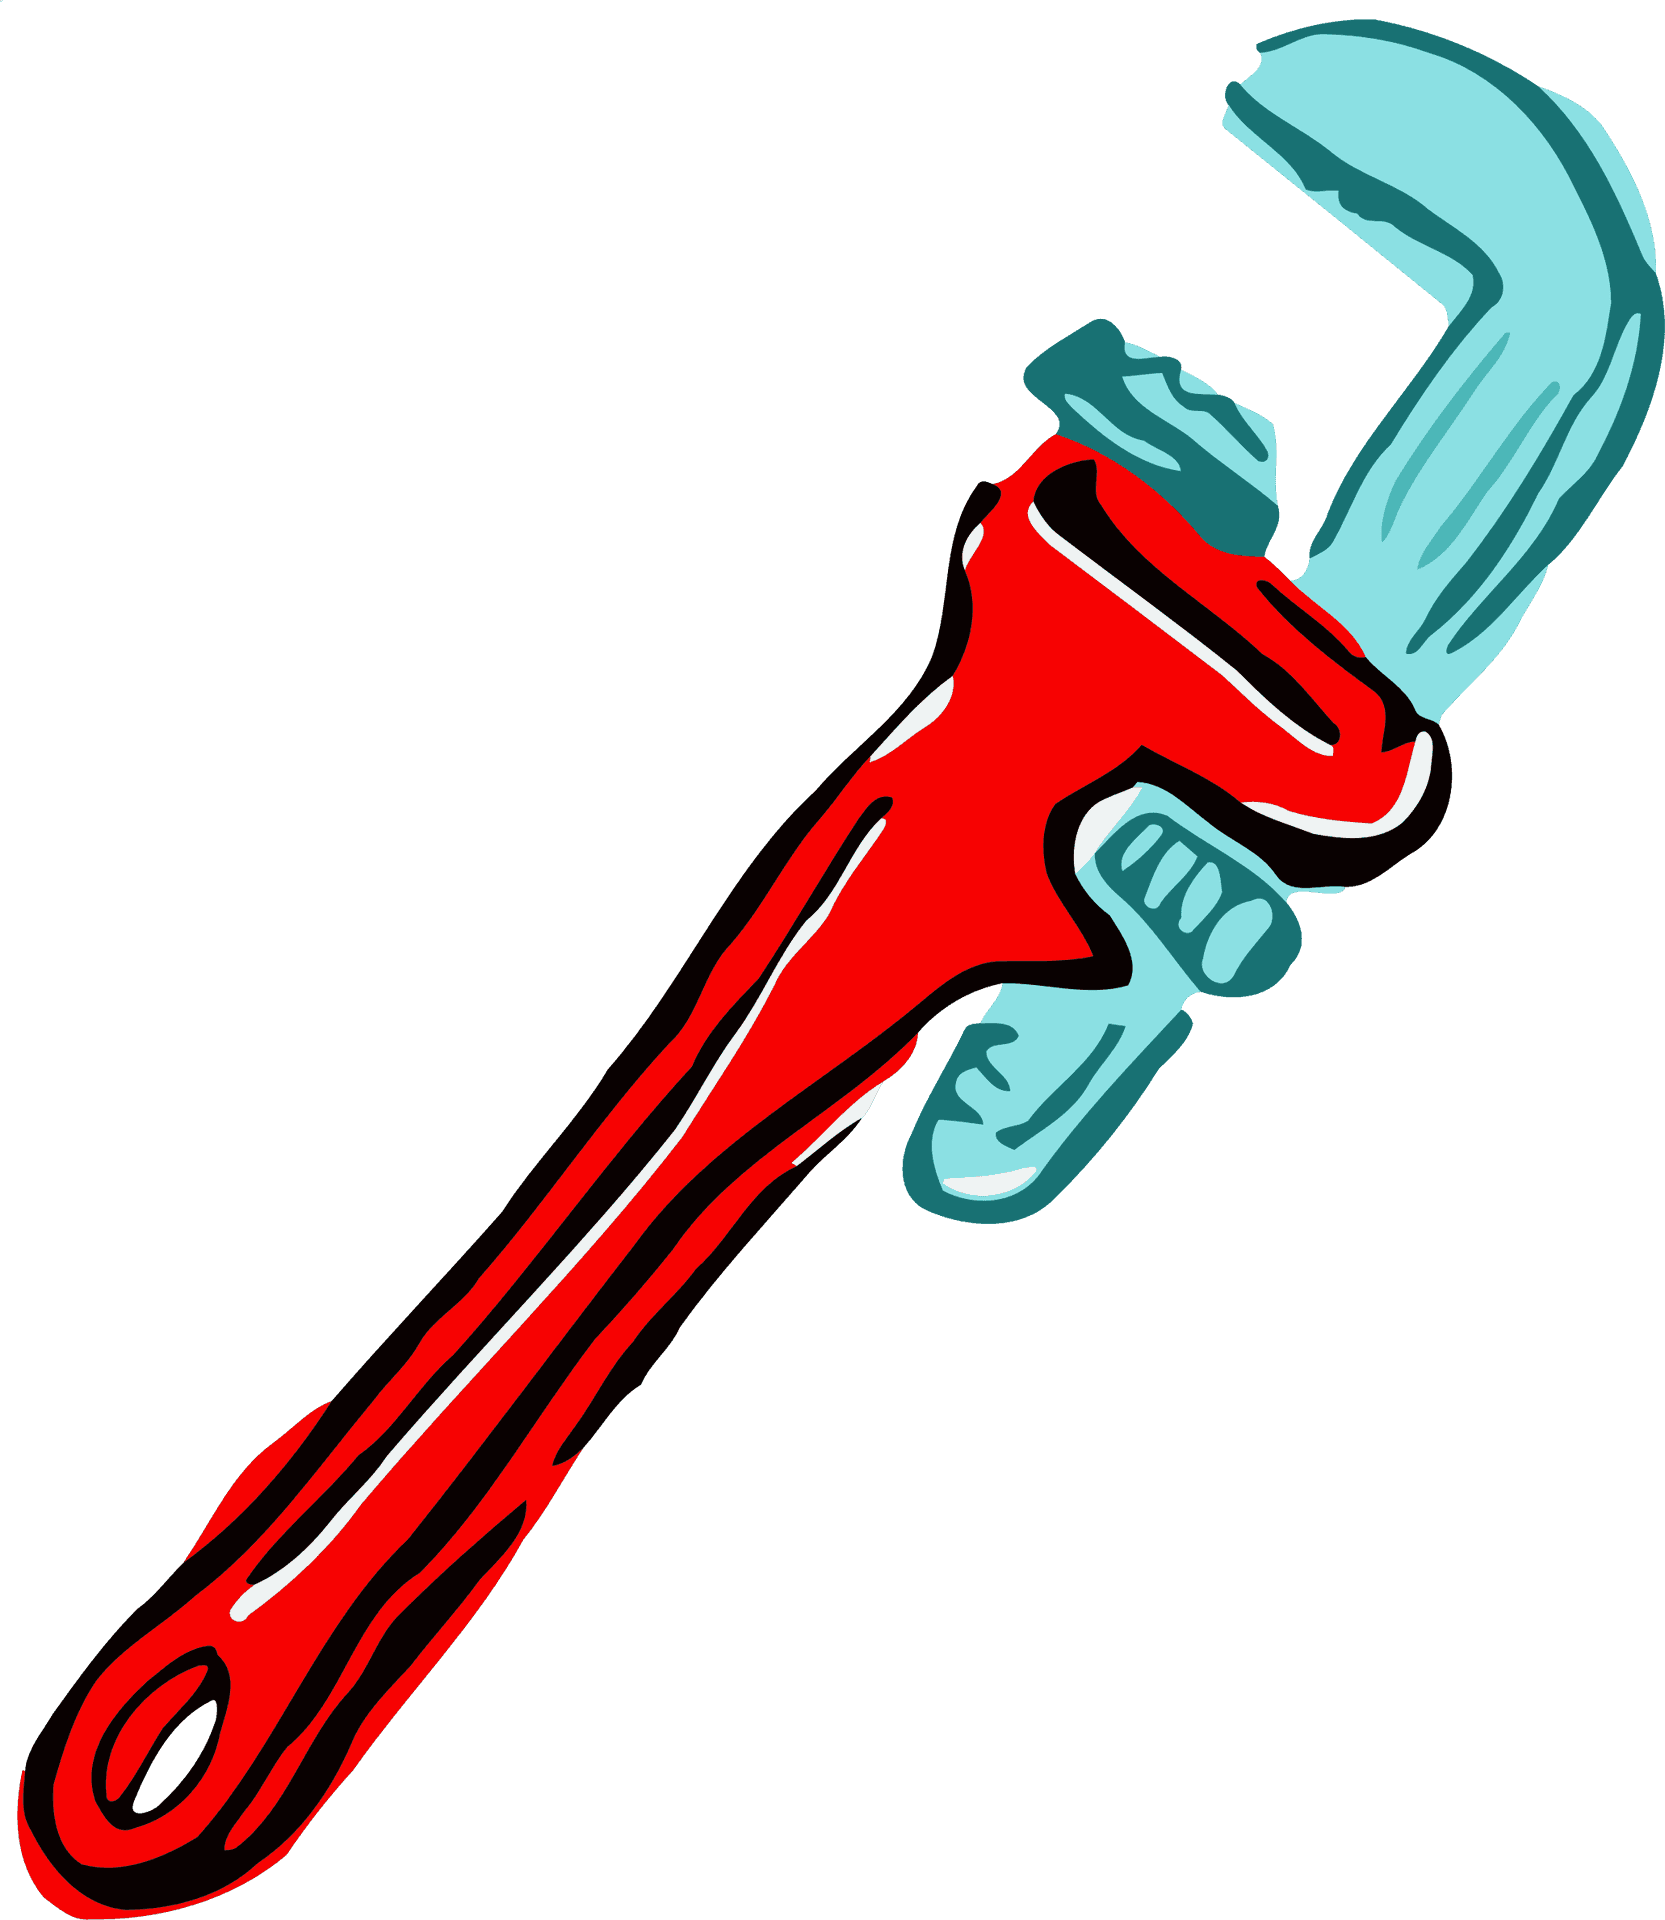 Red Adjustable Wrench Illustration PNG